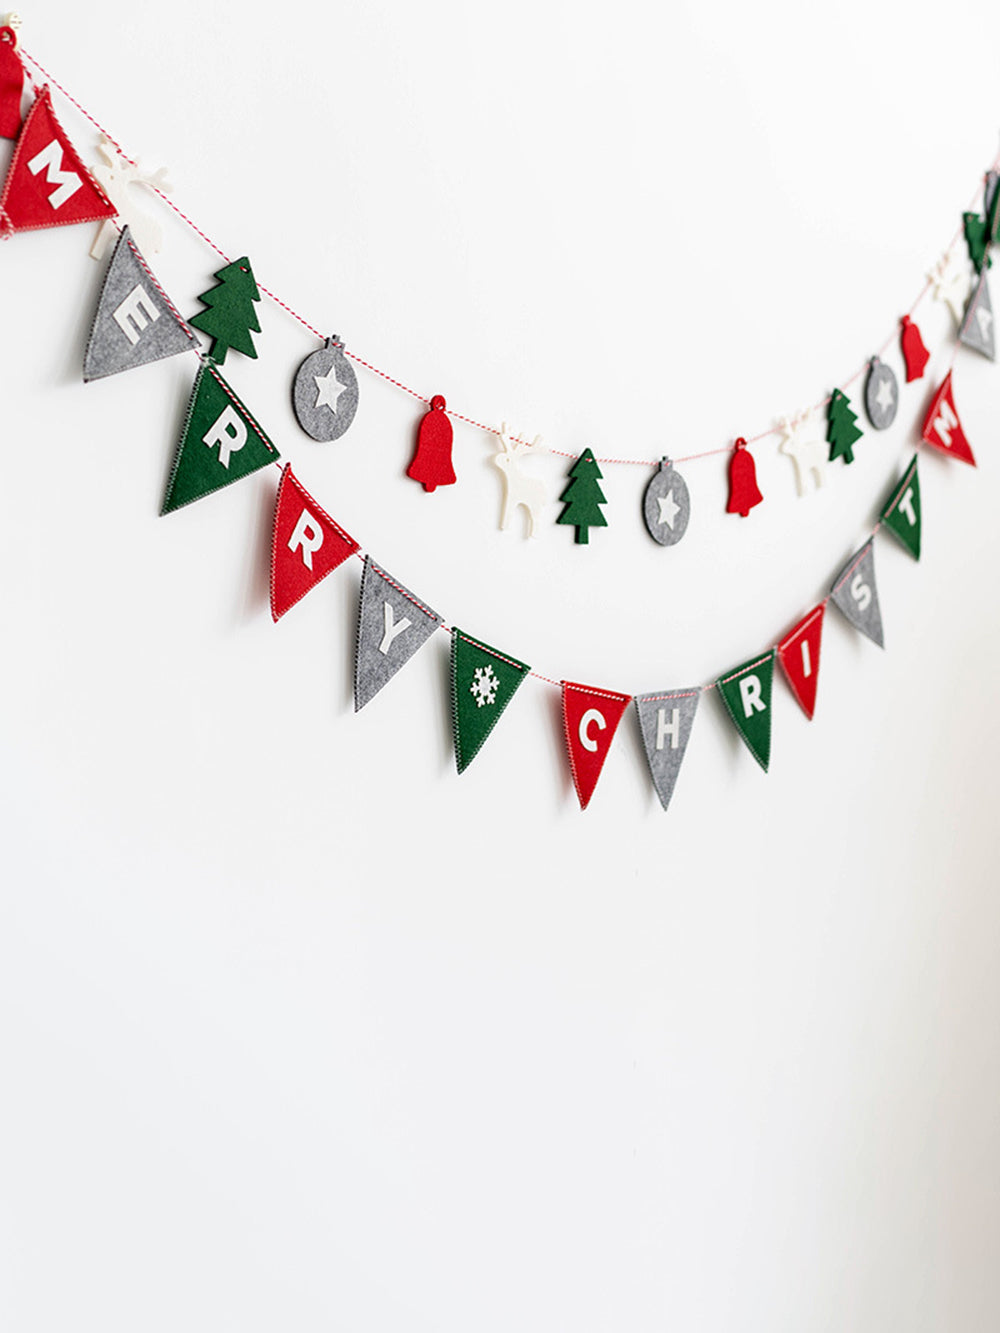 Title: Christmas Wool Felt Letter Flag Banner Hanging Decoration